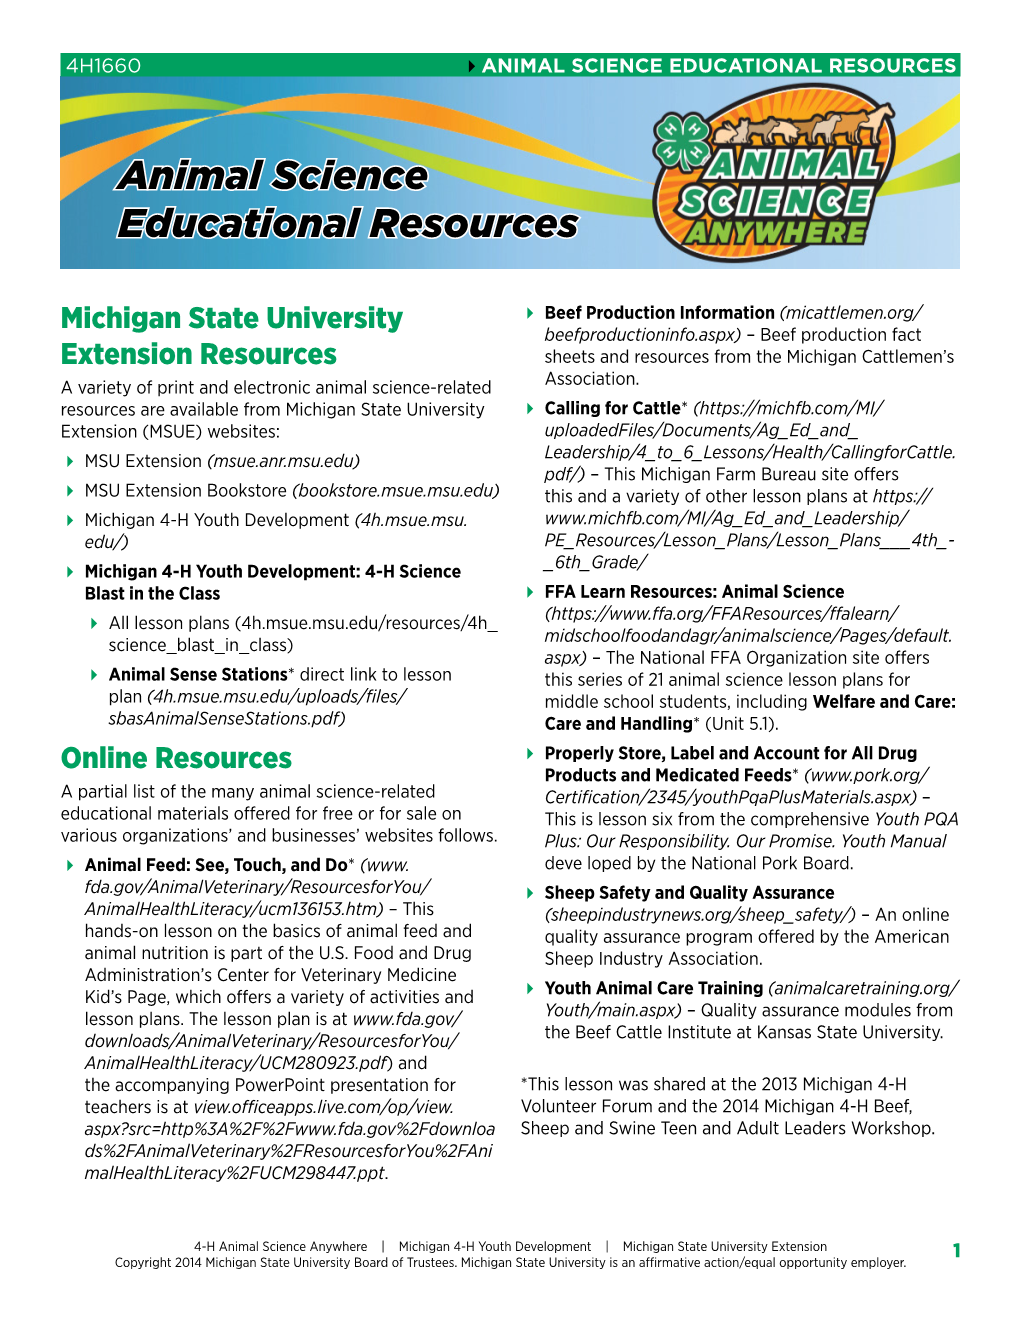 Animal Science Anywhere | Michigan 4-H Youth Development | Michigan State University Extension 1 Copyright 2014 Michigan State University Board of Trustees